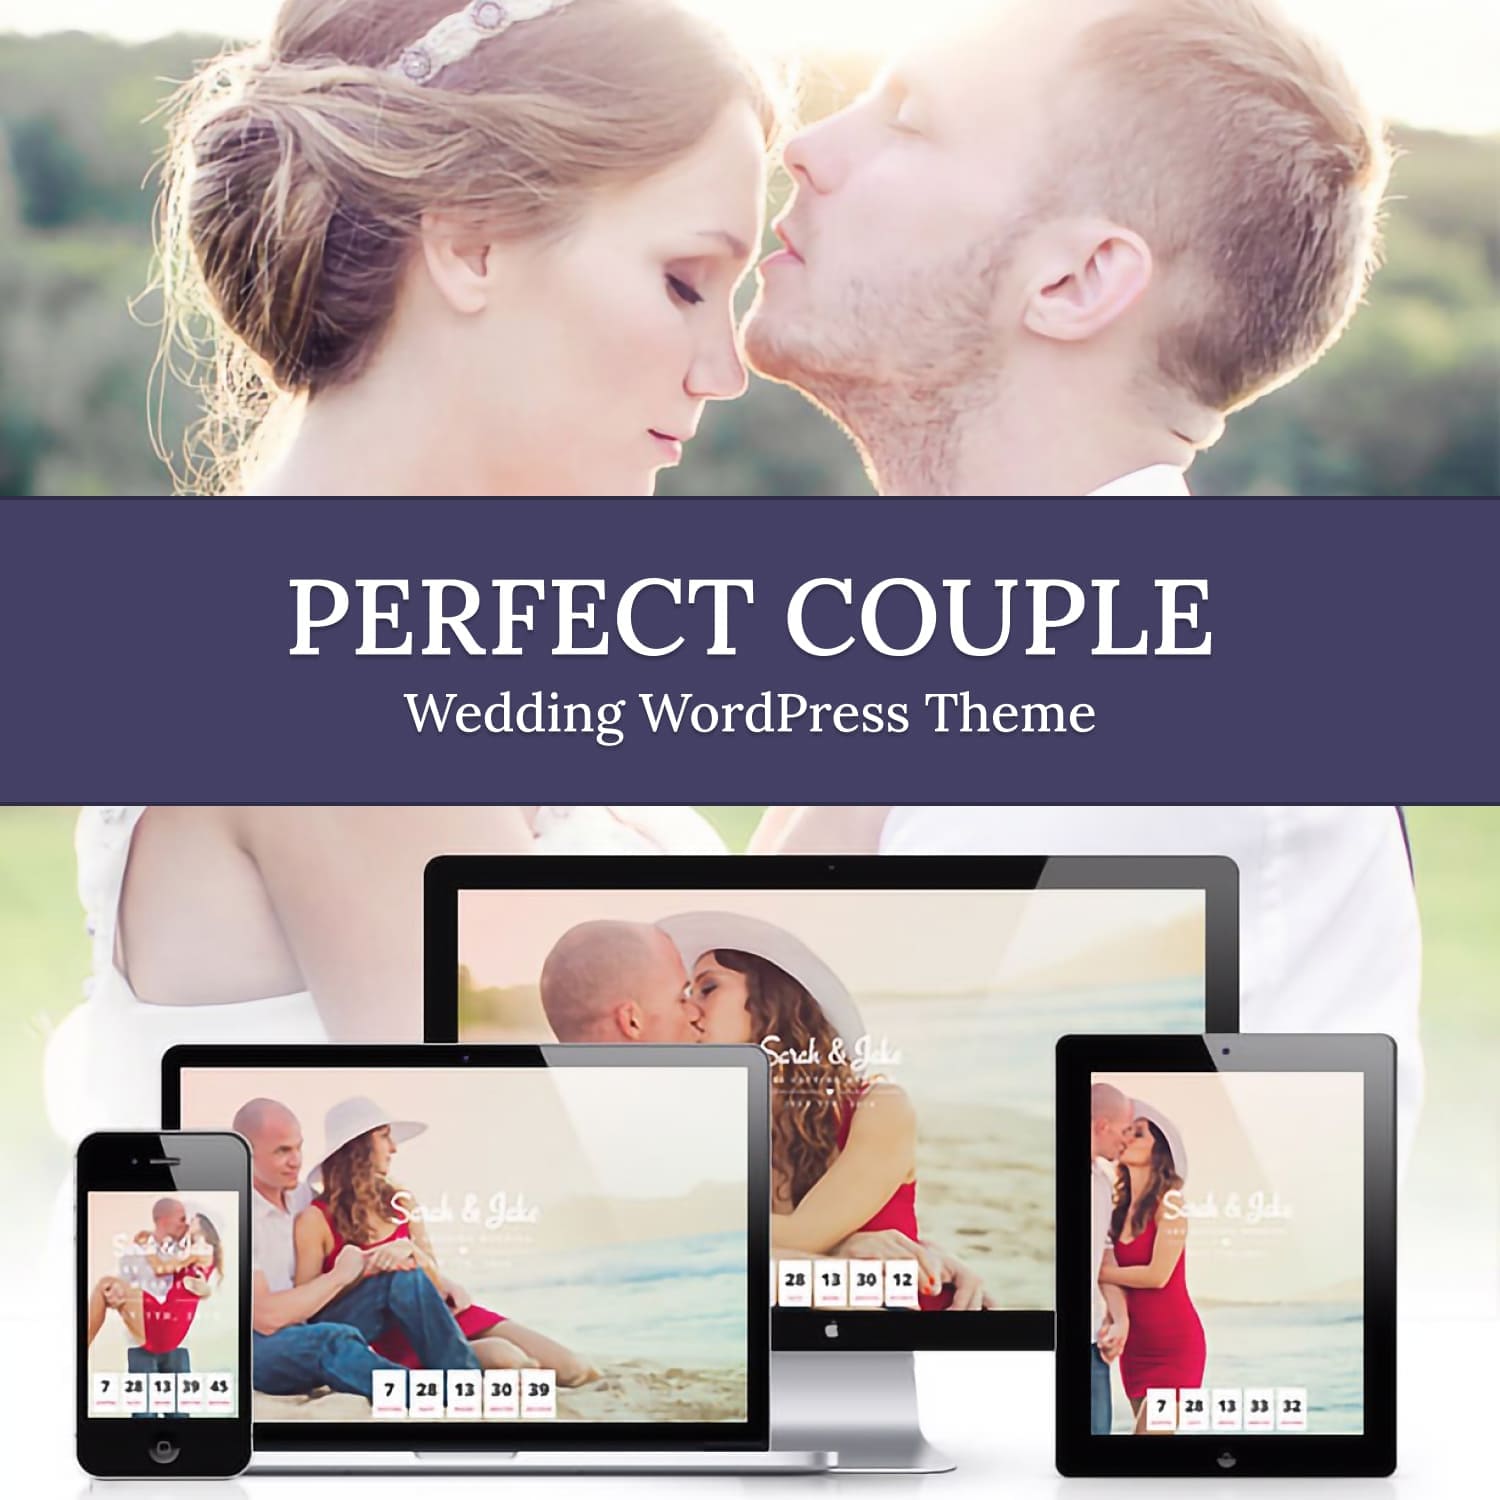 Perfect couple wedding wordpress theme, main image 1500x1500.